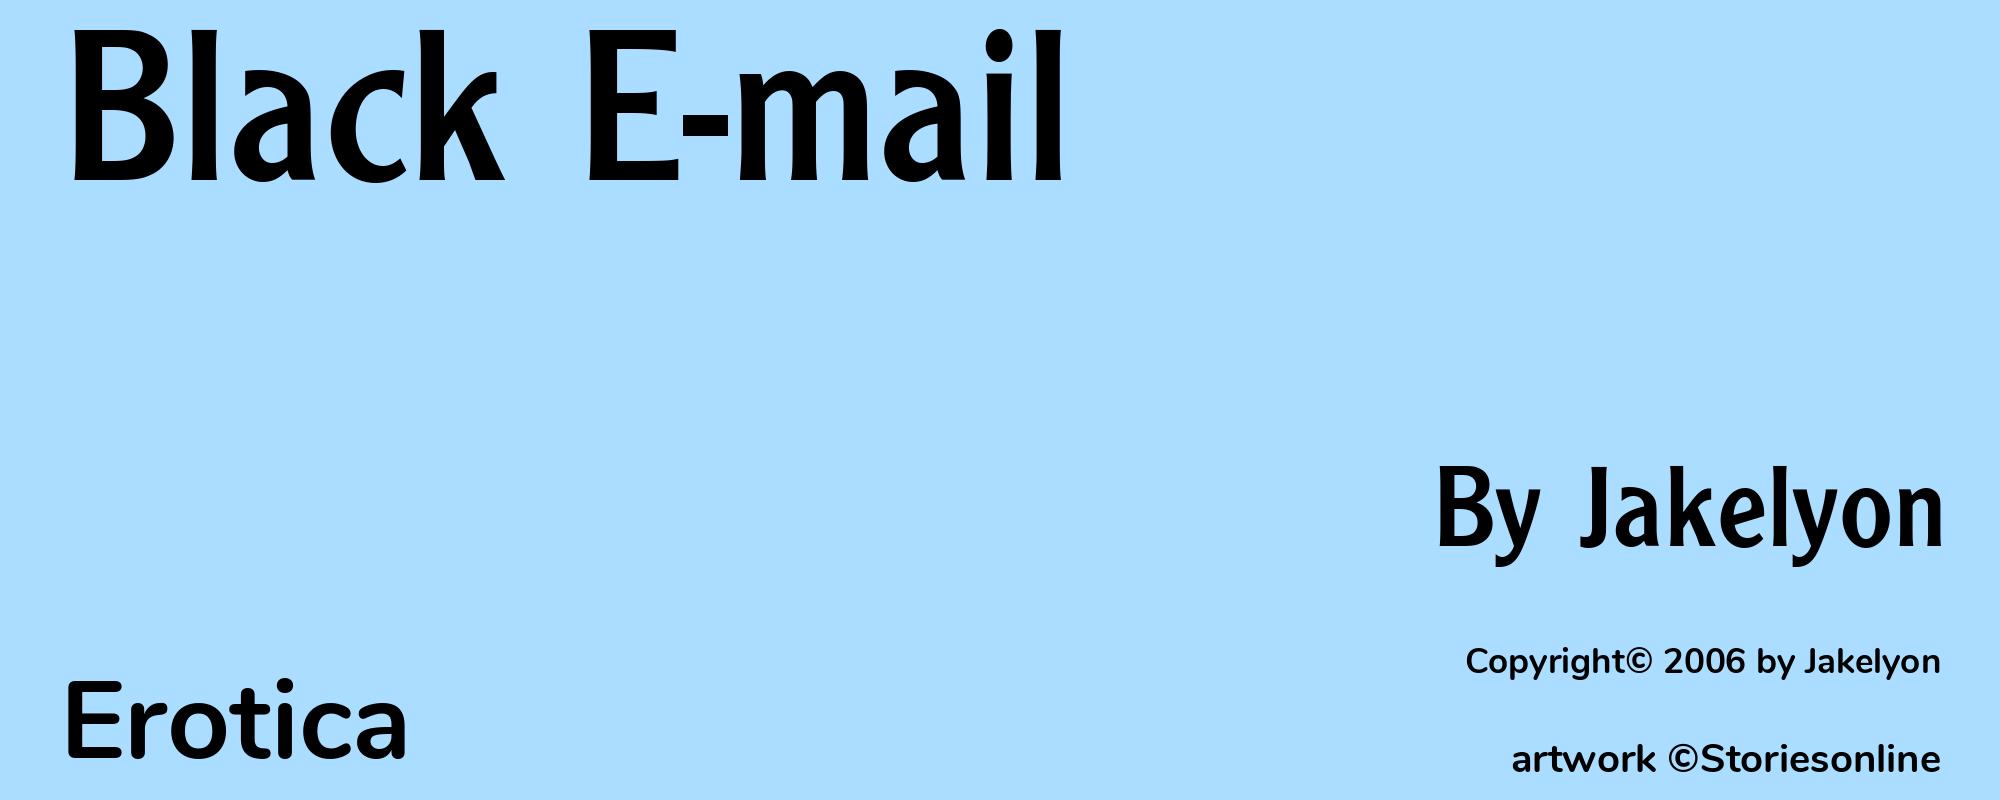 Black E-mail - Cover